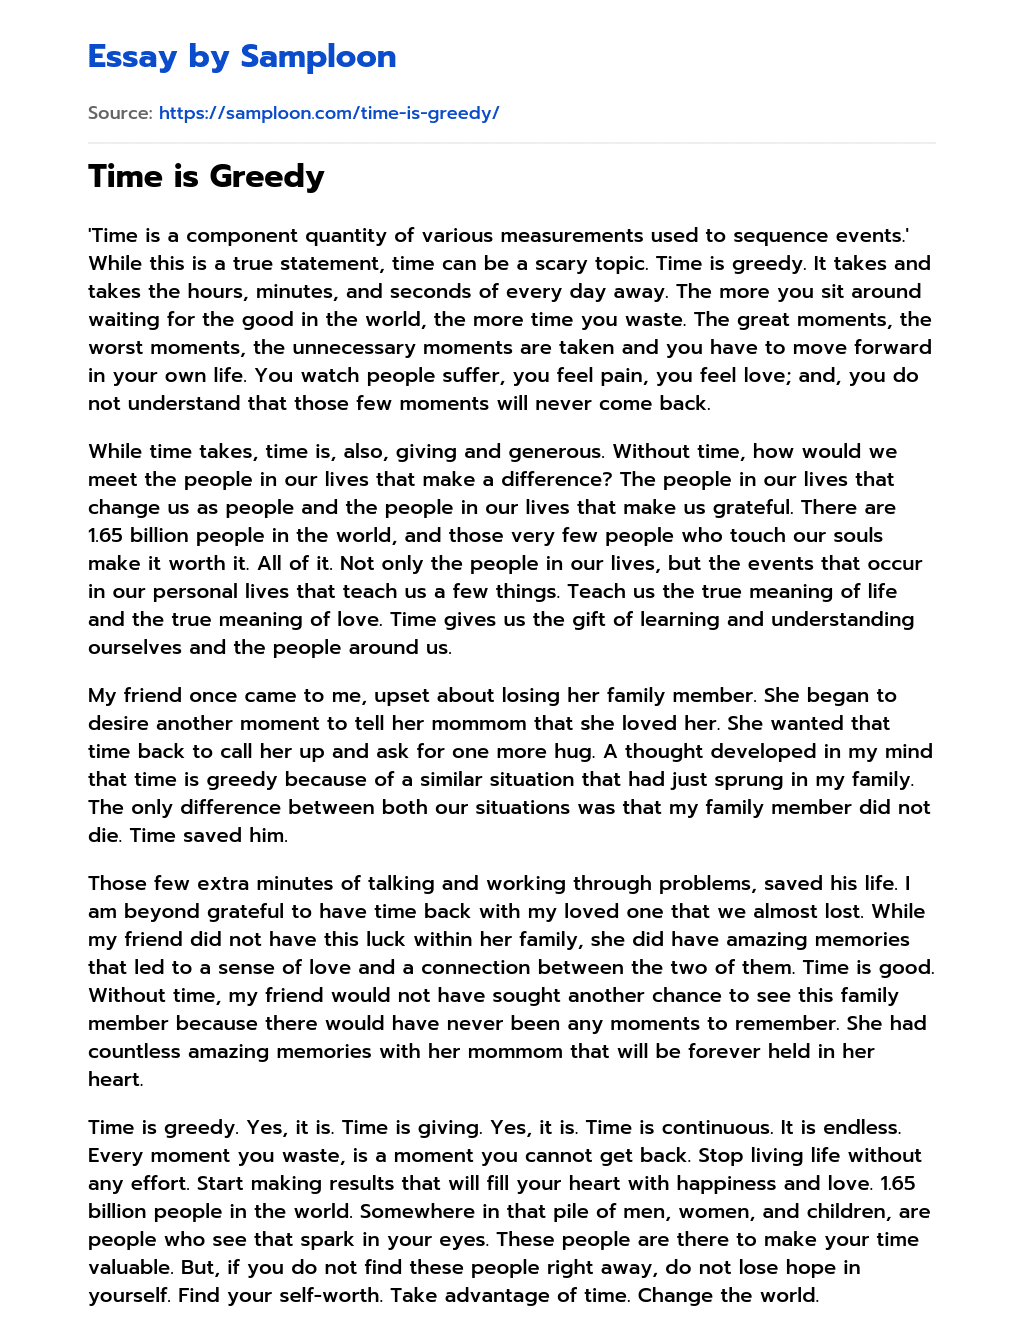 Time is Greedy essay